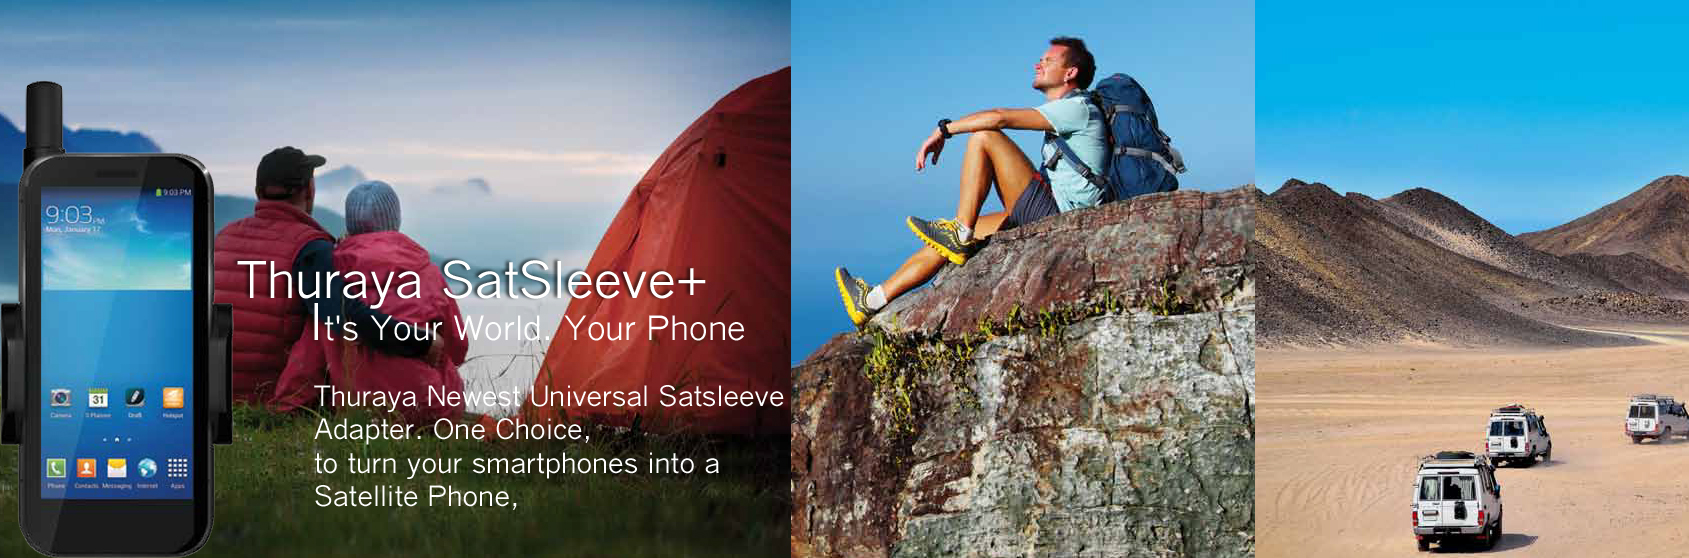 thuraya-satsleeve-plus-universal-adapter-call-europe-africa-asia-with-your-smartphone-good.jpg